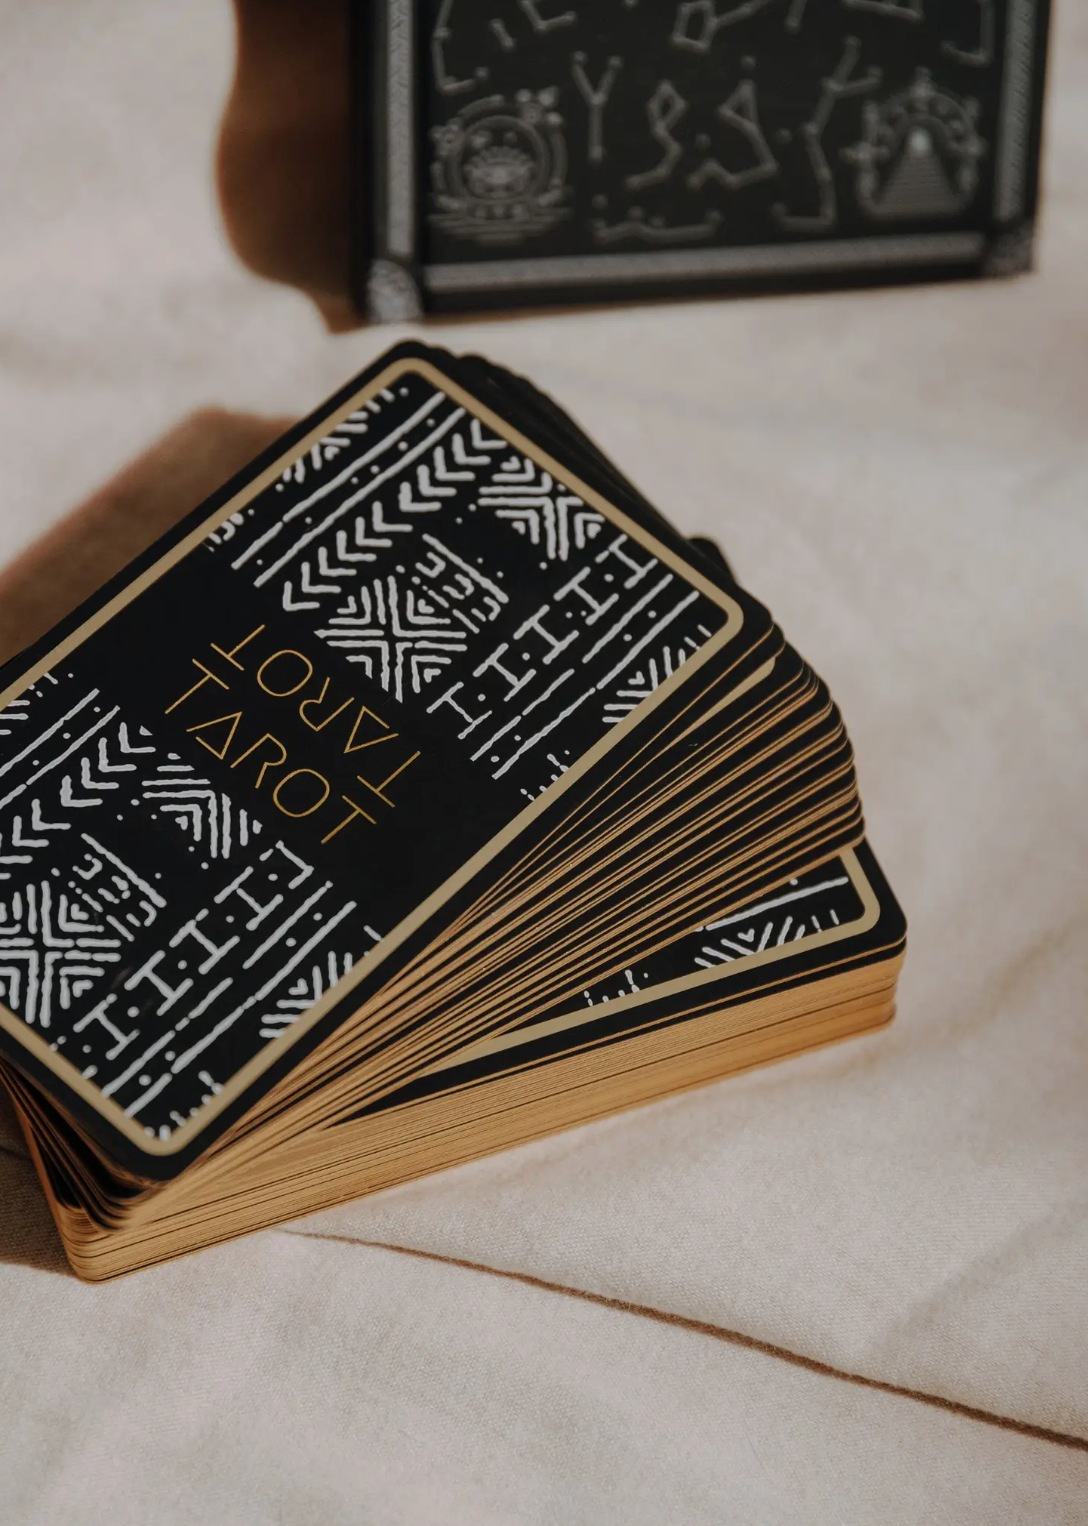 Tazama African American Tarot Deck - Modern Black Tarot Cards